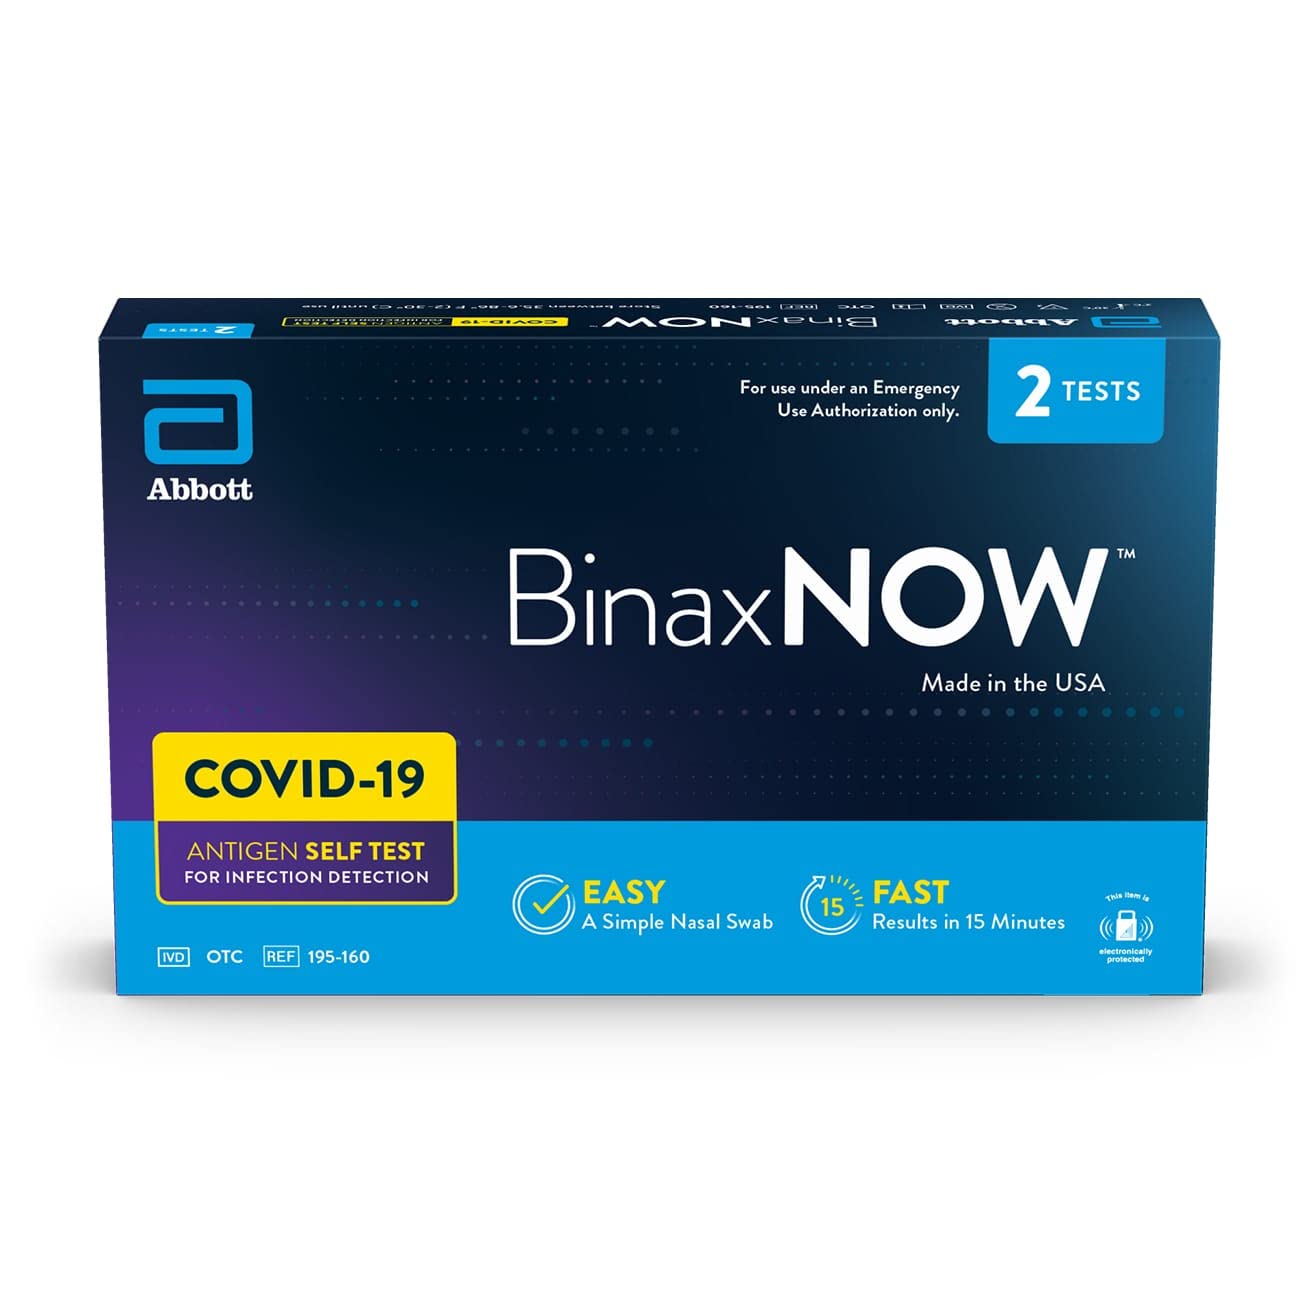 BinaxNOW COVID-19 Antigen Self Test, 1 Pack, 2 Tests Total, COVID Test $15.88 @ Amazon